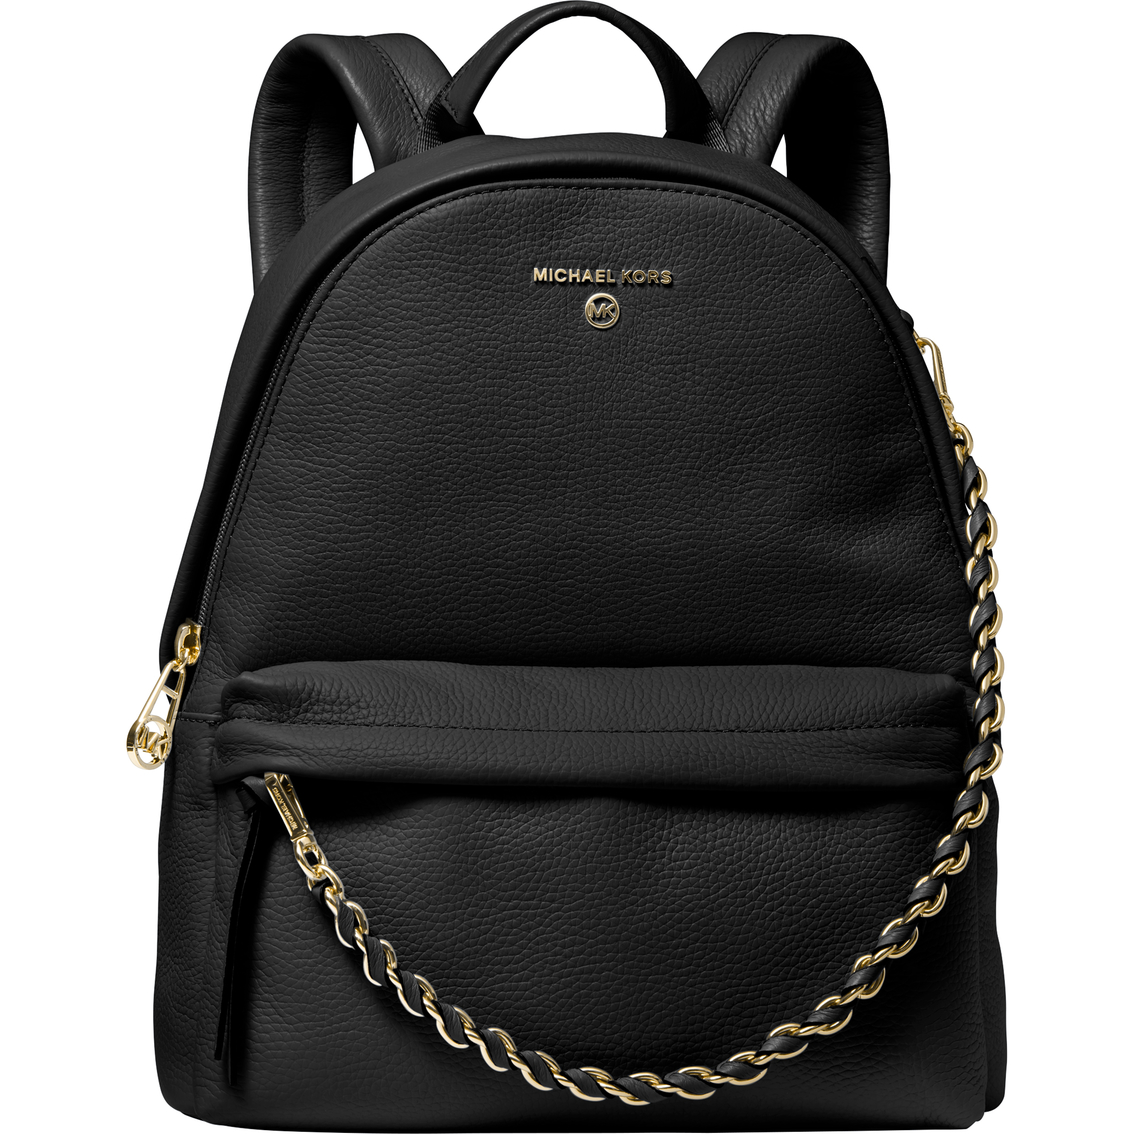 Michael Kors Slater Medium Leather Backpack | Backpacks | Clothing ...